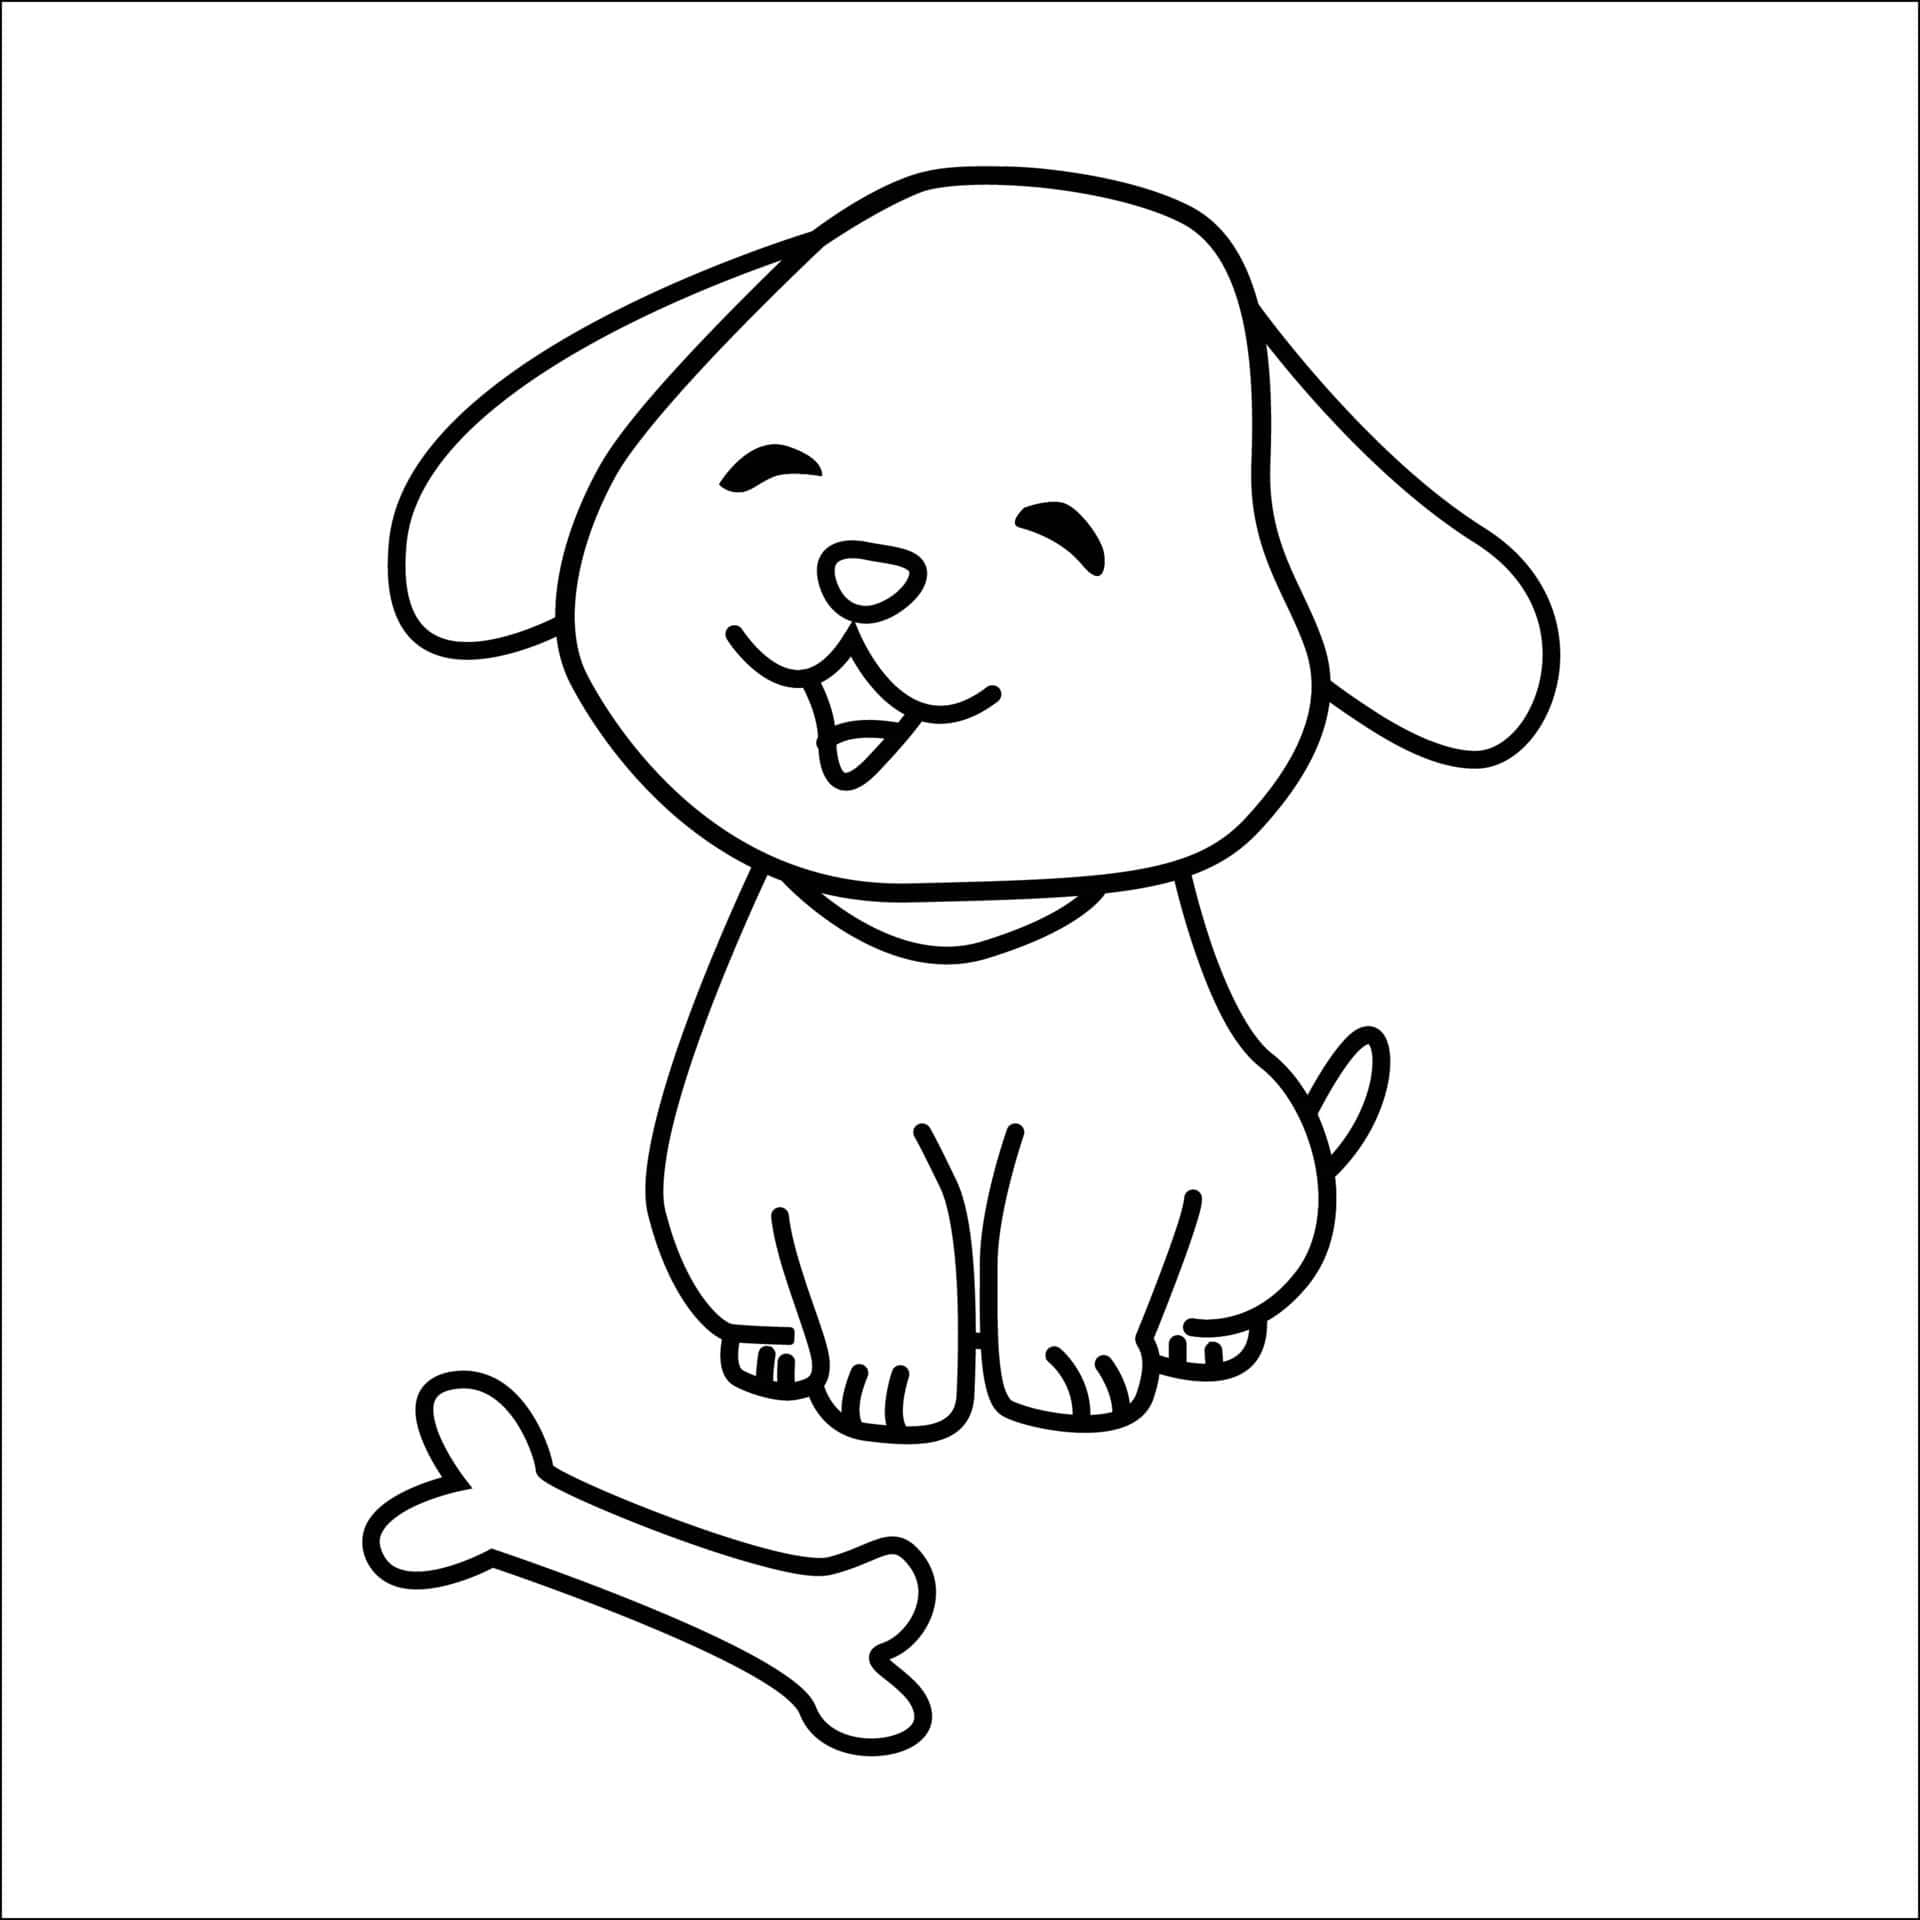 Cute dog draw Stickers | Unique Designs | Spreadshirt